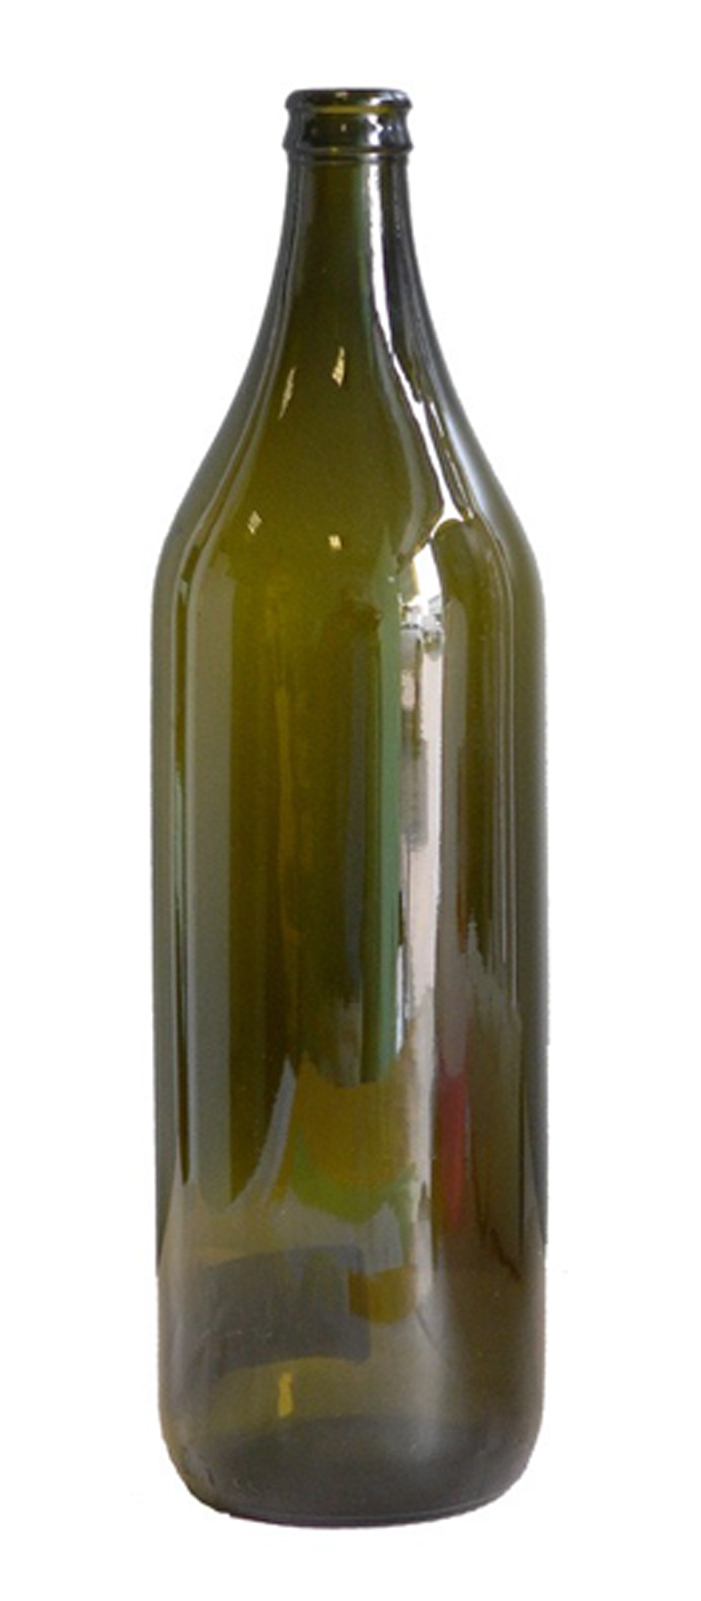 Bottiglia Emiliana 750 mL Tappo Sughero (20 pezzi) Vino